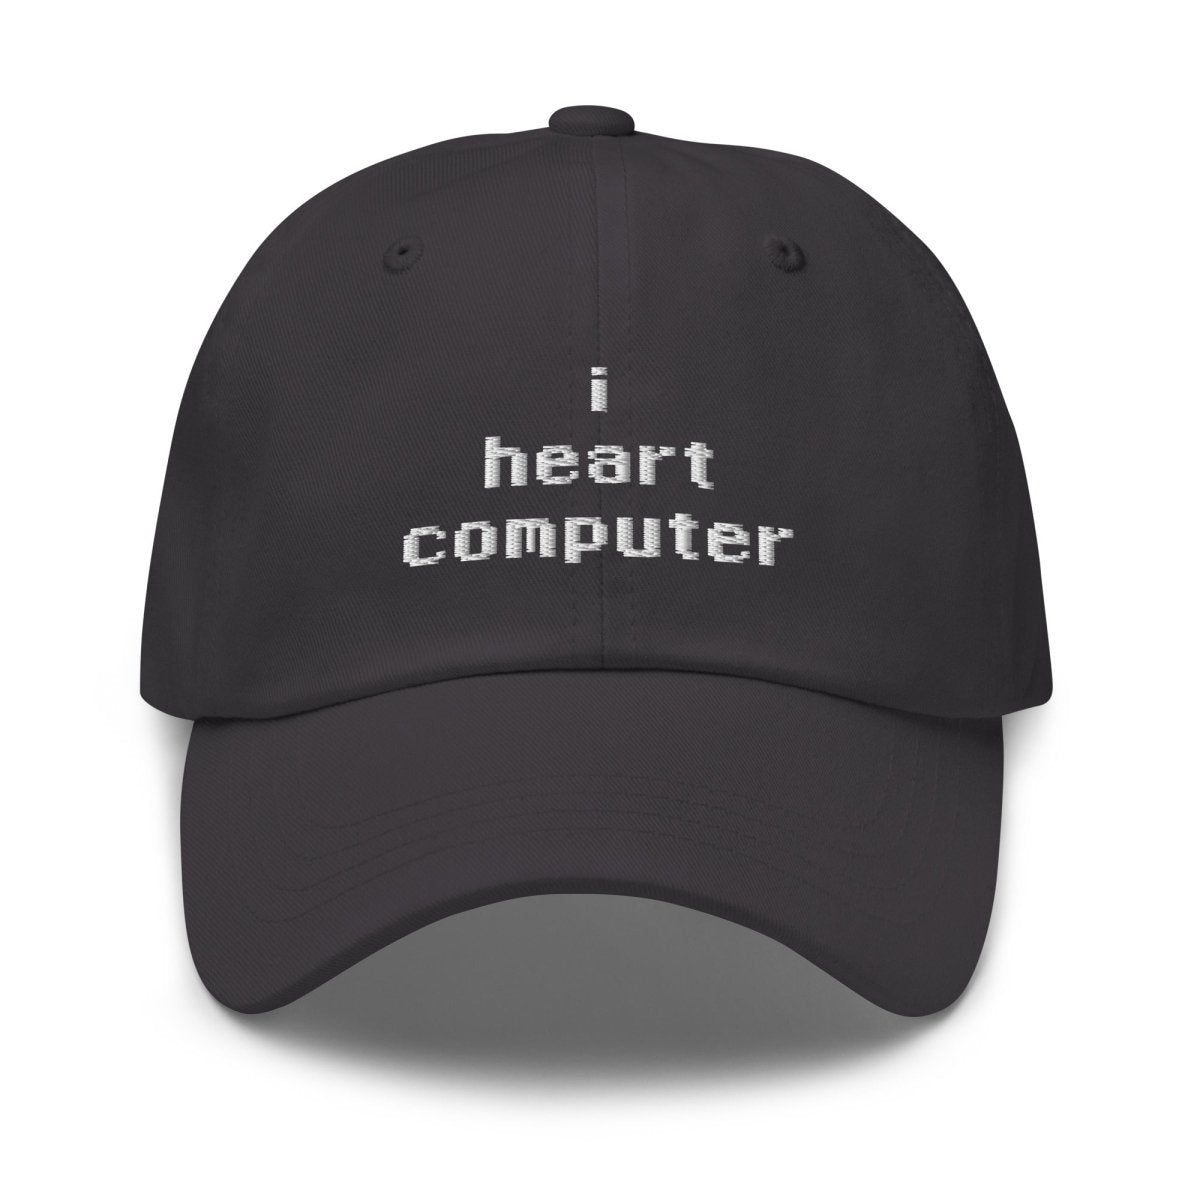 I heart computer hat - Pretty Bad Co.